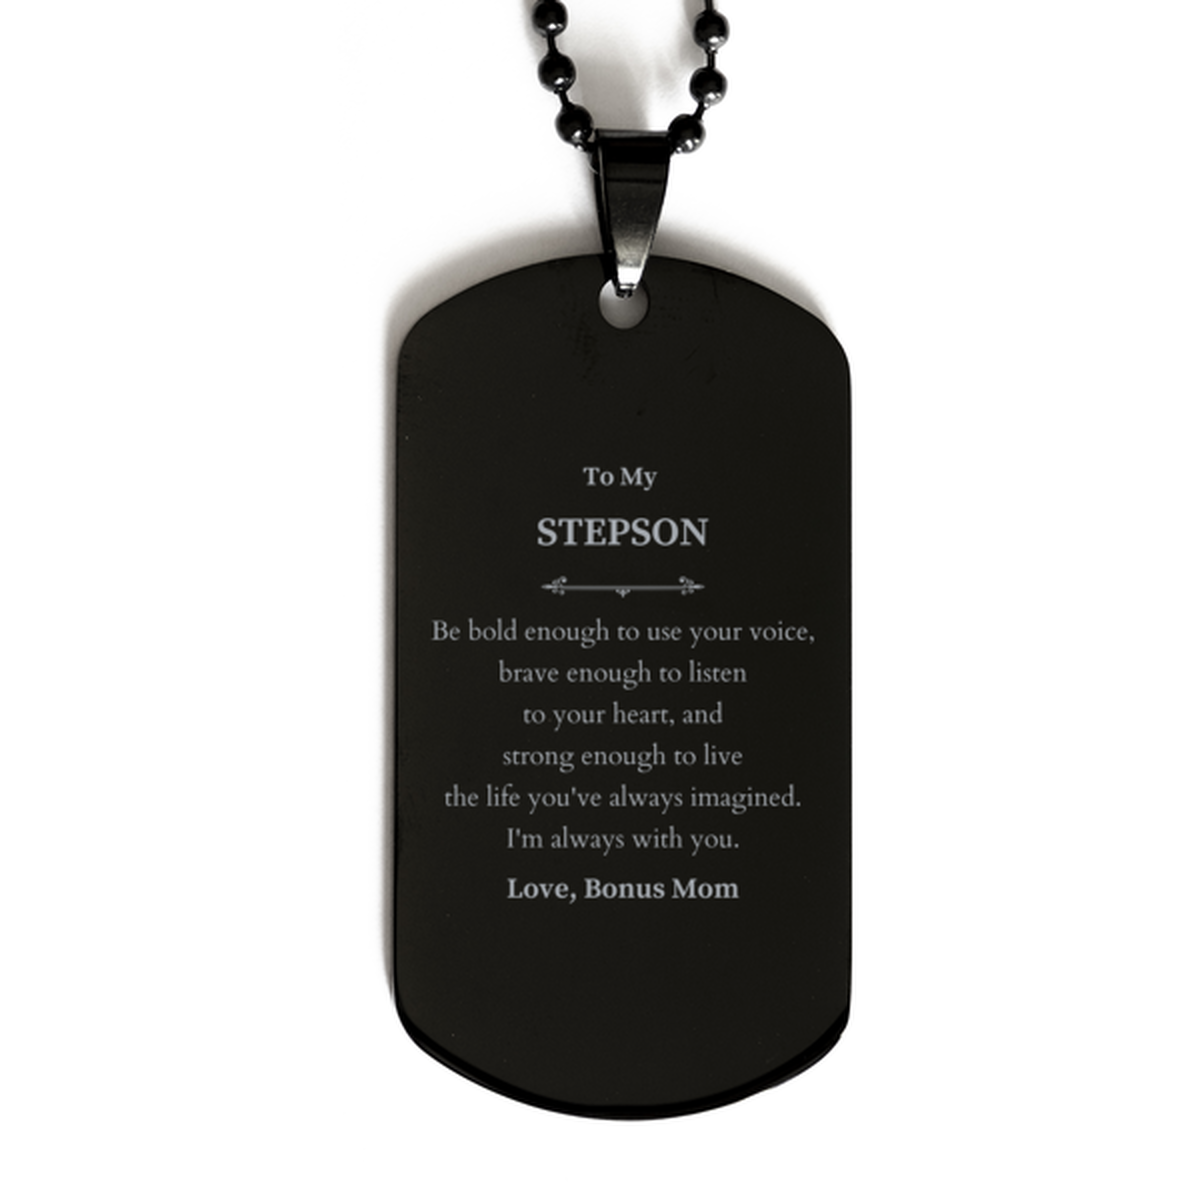 Keepsake Stepson Black Dog Tag Gift Idea Graduation Christmas Birthday Stepson from Bonus Mom, Stepson Be bold enough to use your voice, brave enough to listen to your heart. Love, Bonus Mom